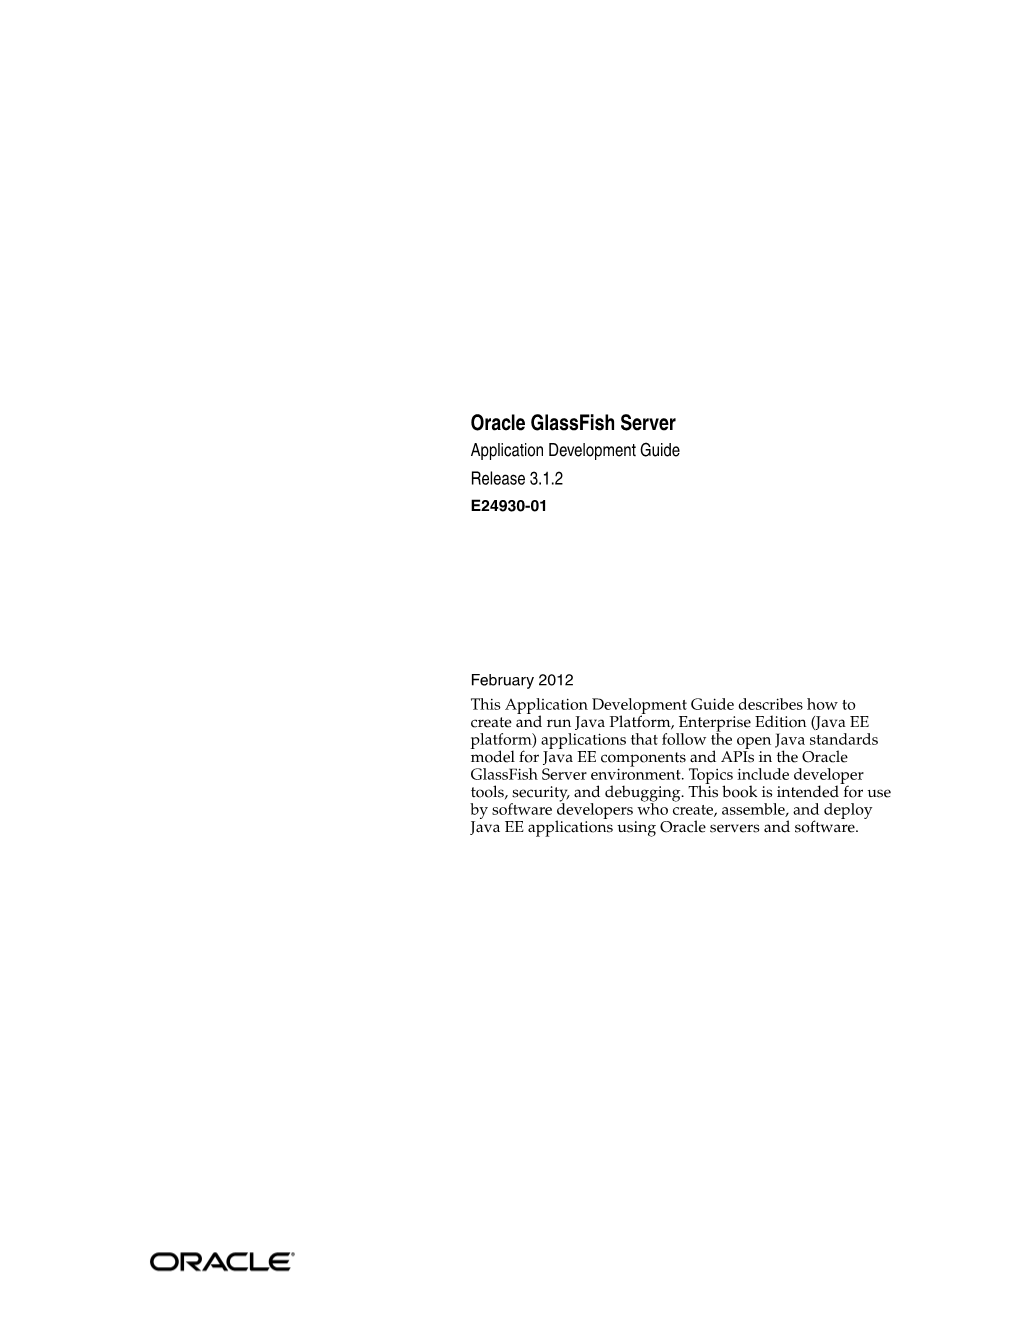 Oracle Glassfish Server Application Development Guide Release 3.1.2 E24930-01